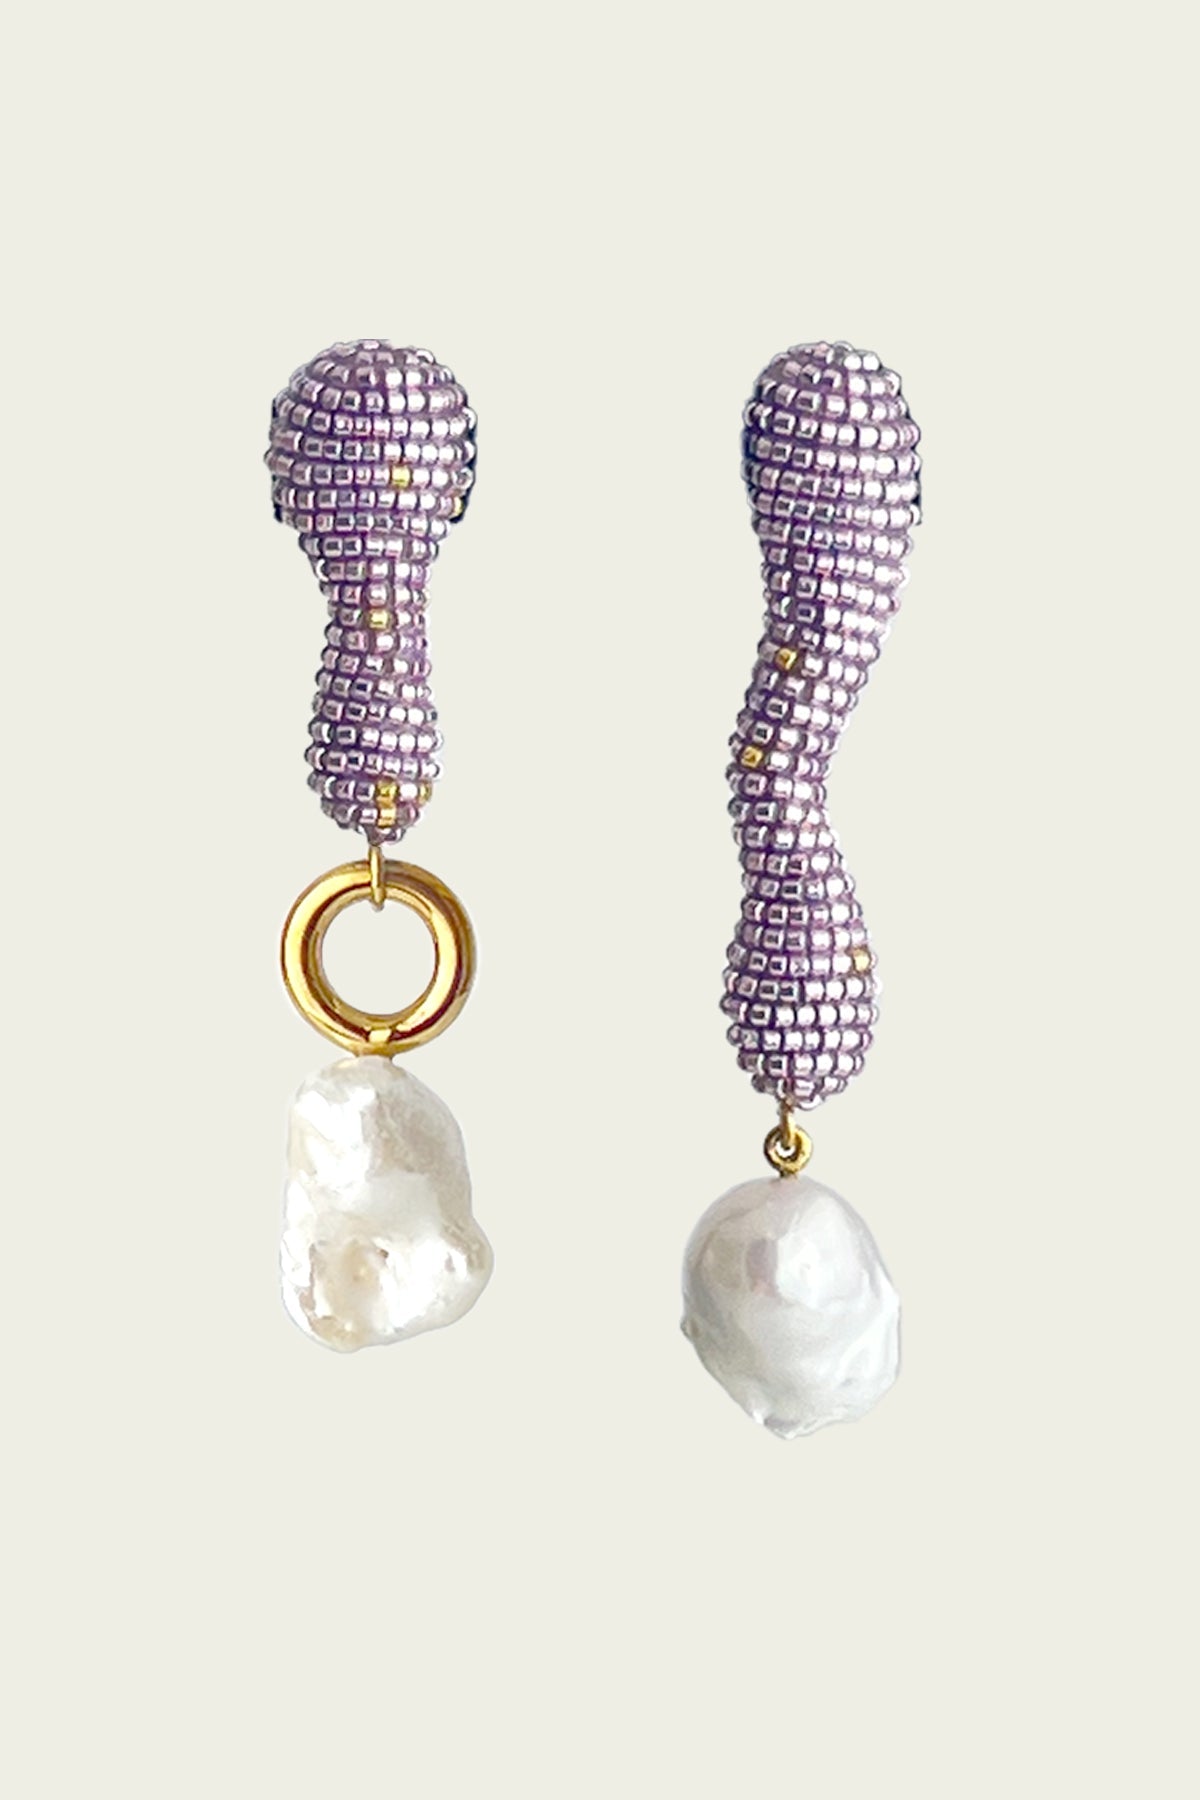 Finito Pearled Earrings in Lilac - shop-olivia.com